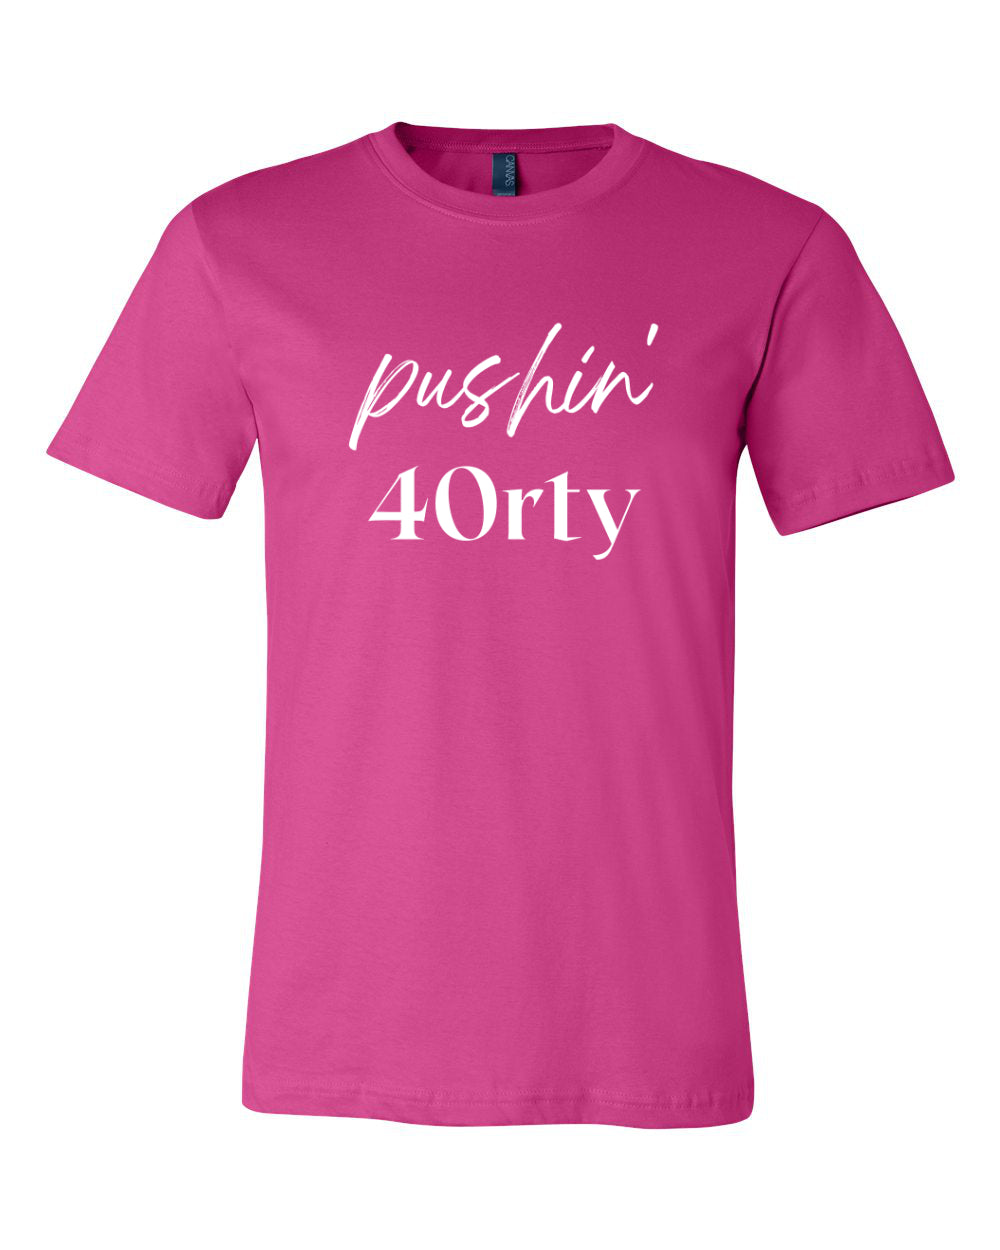 Pushin' 40rty Shirt